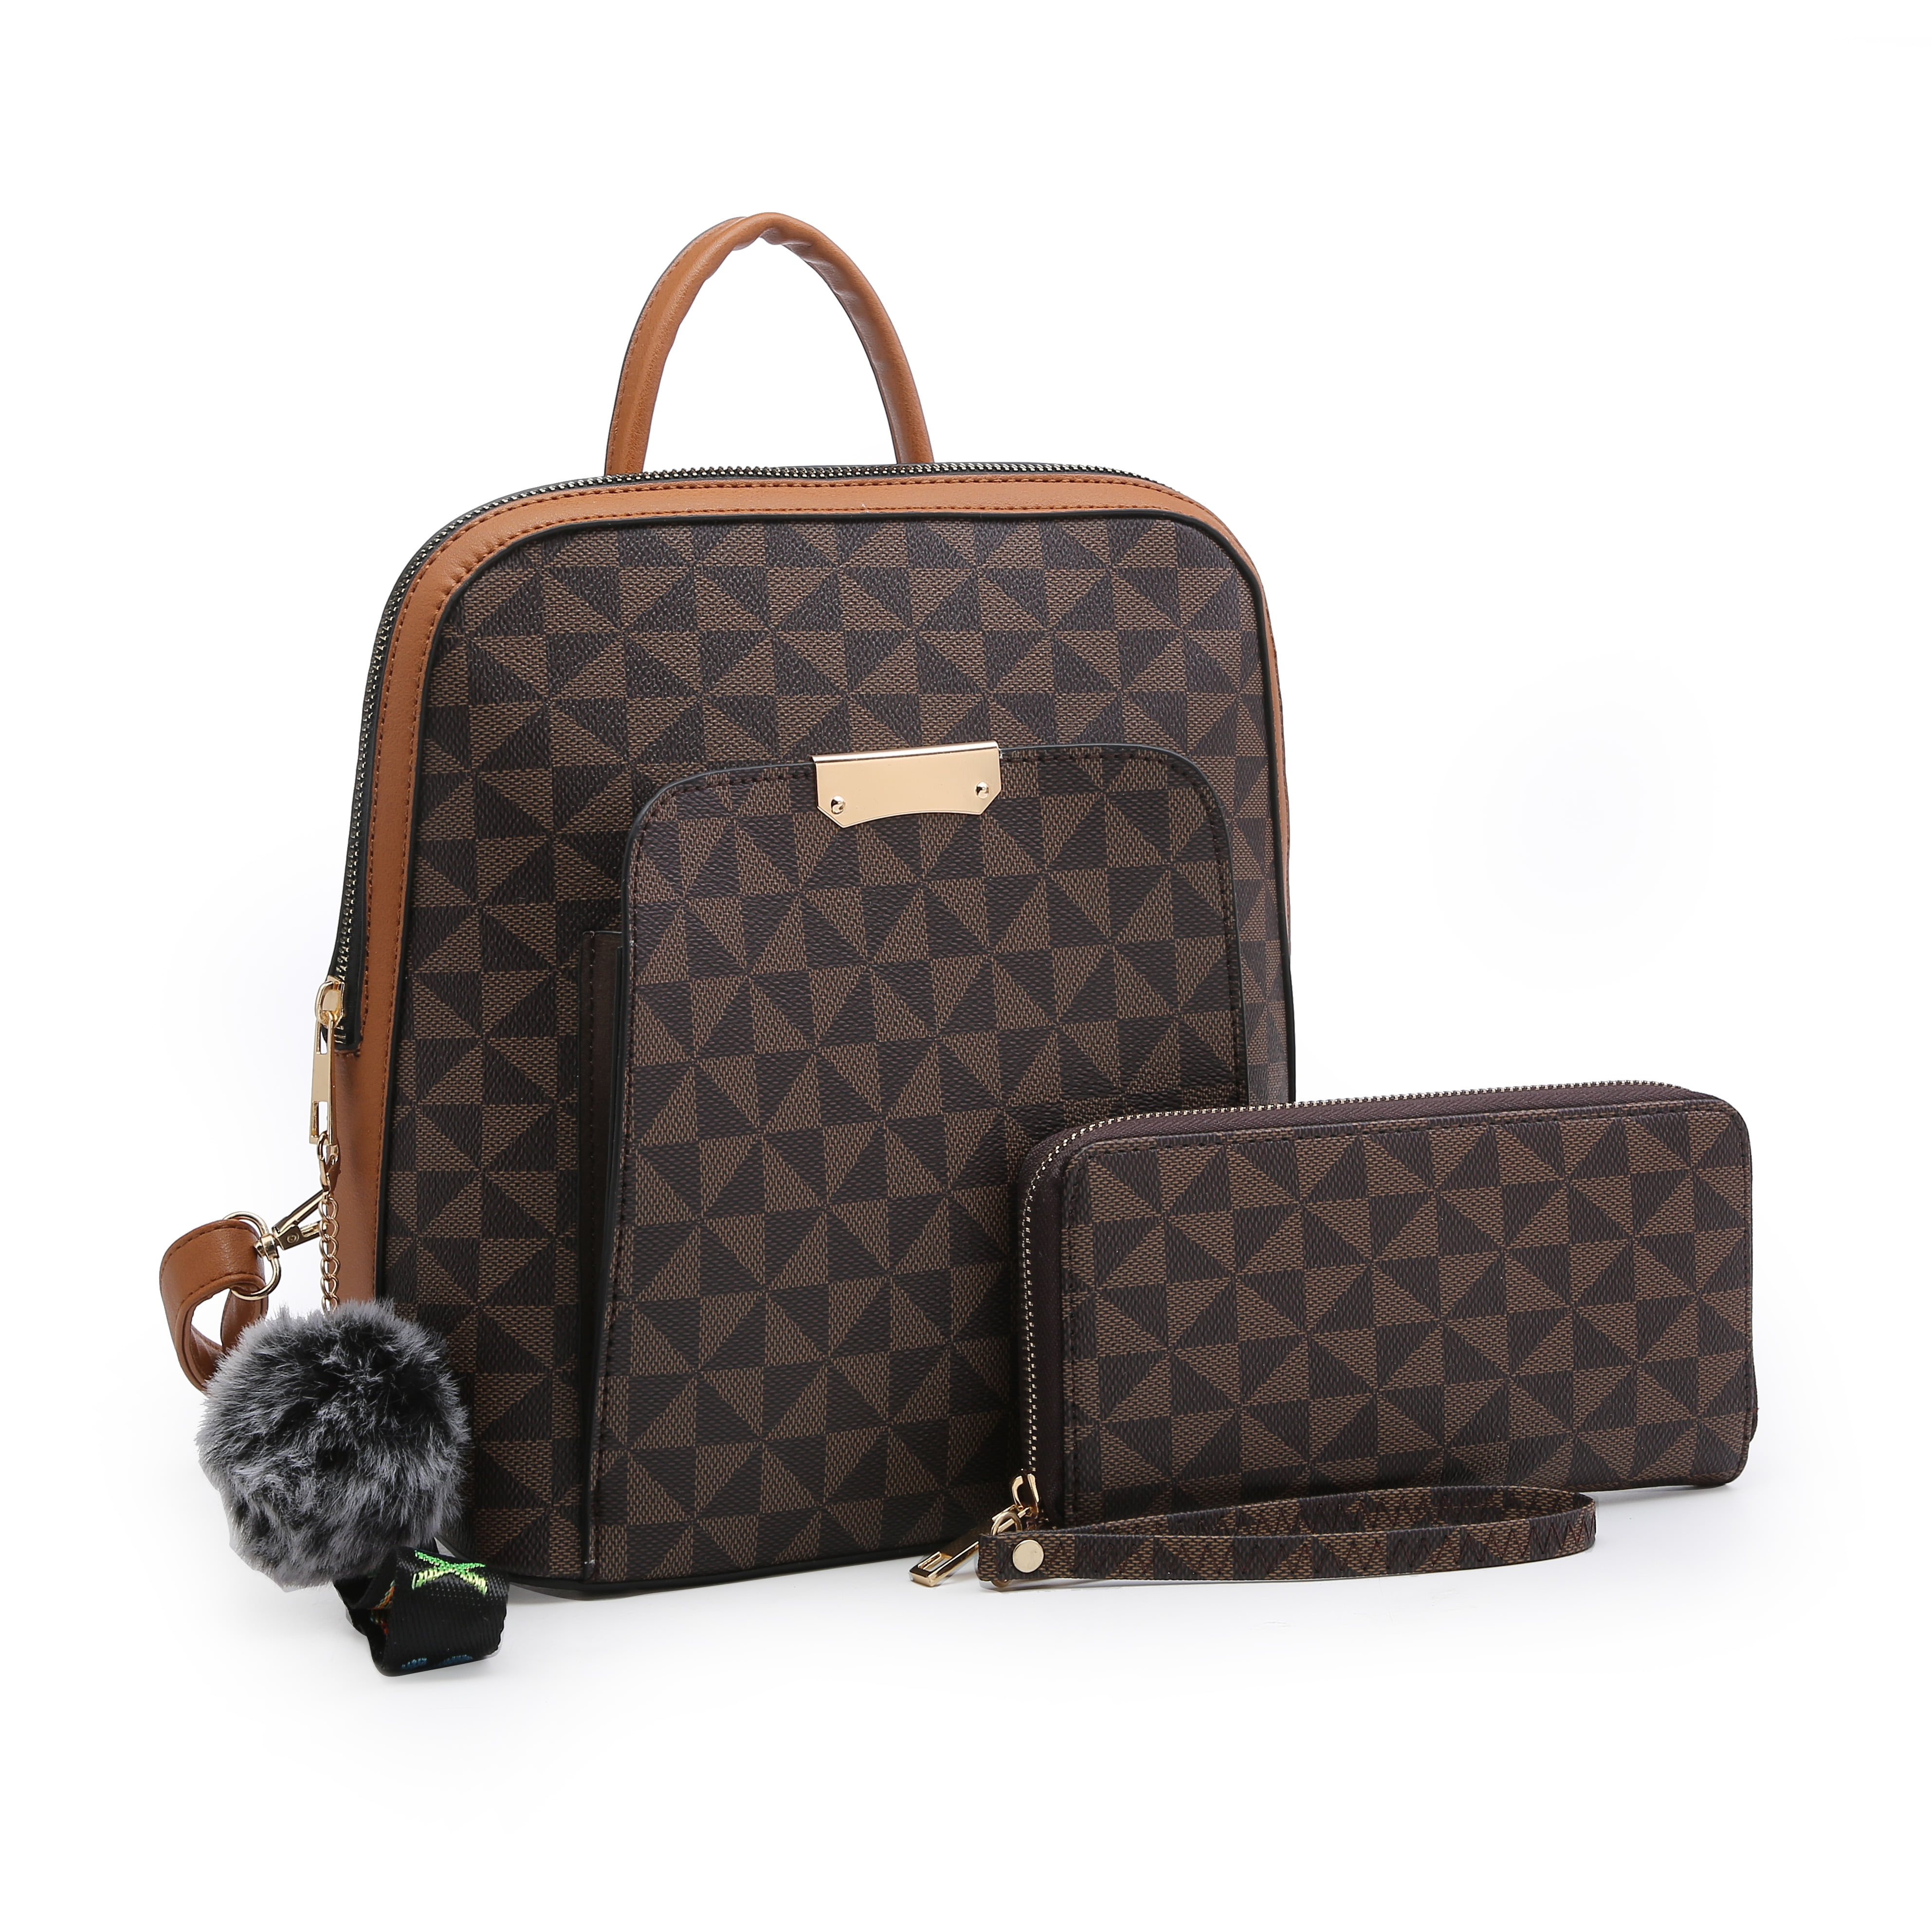 PU Leather Shoulder Bag,Mushroom Head Cat Fashion Backpack,Portable Travel School Rucksack,Satchel with Top Handle